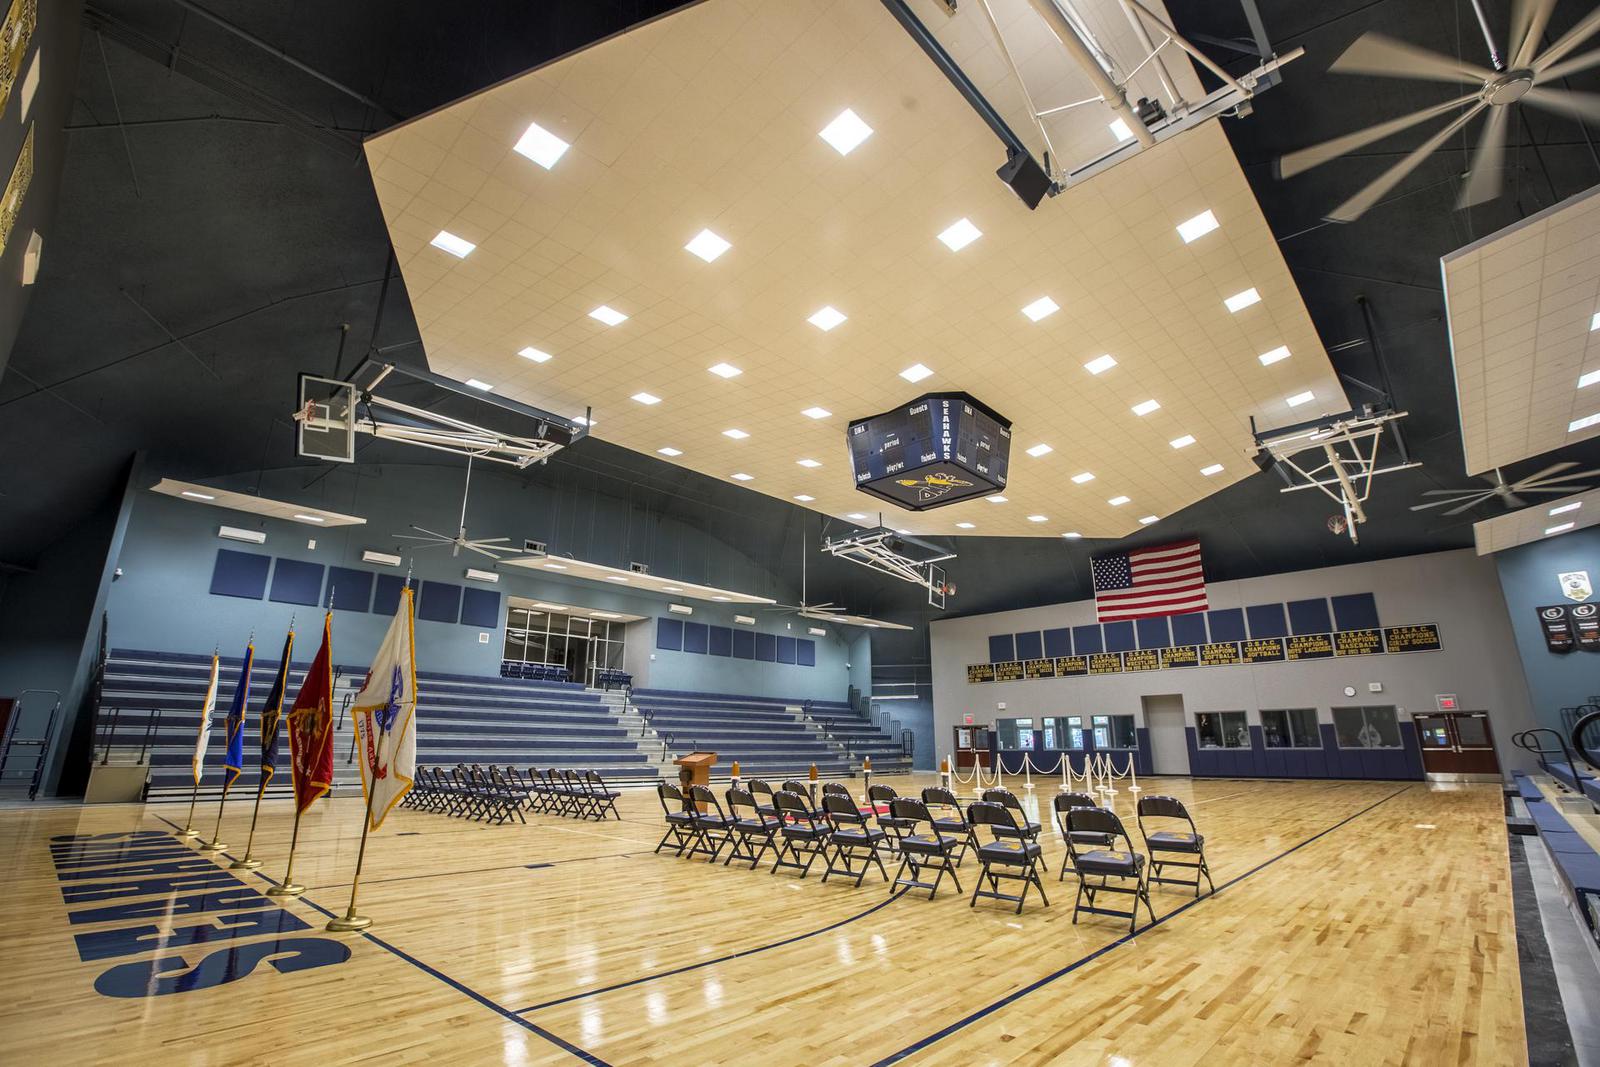 Gymnasium Inside the Athletic Center.